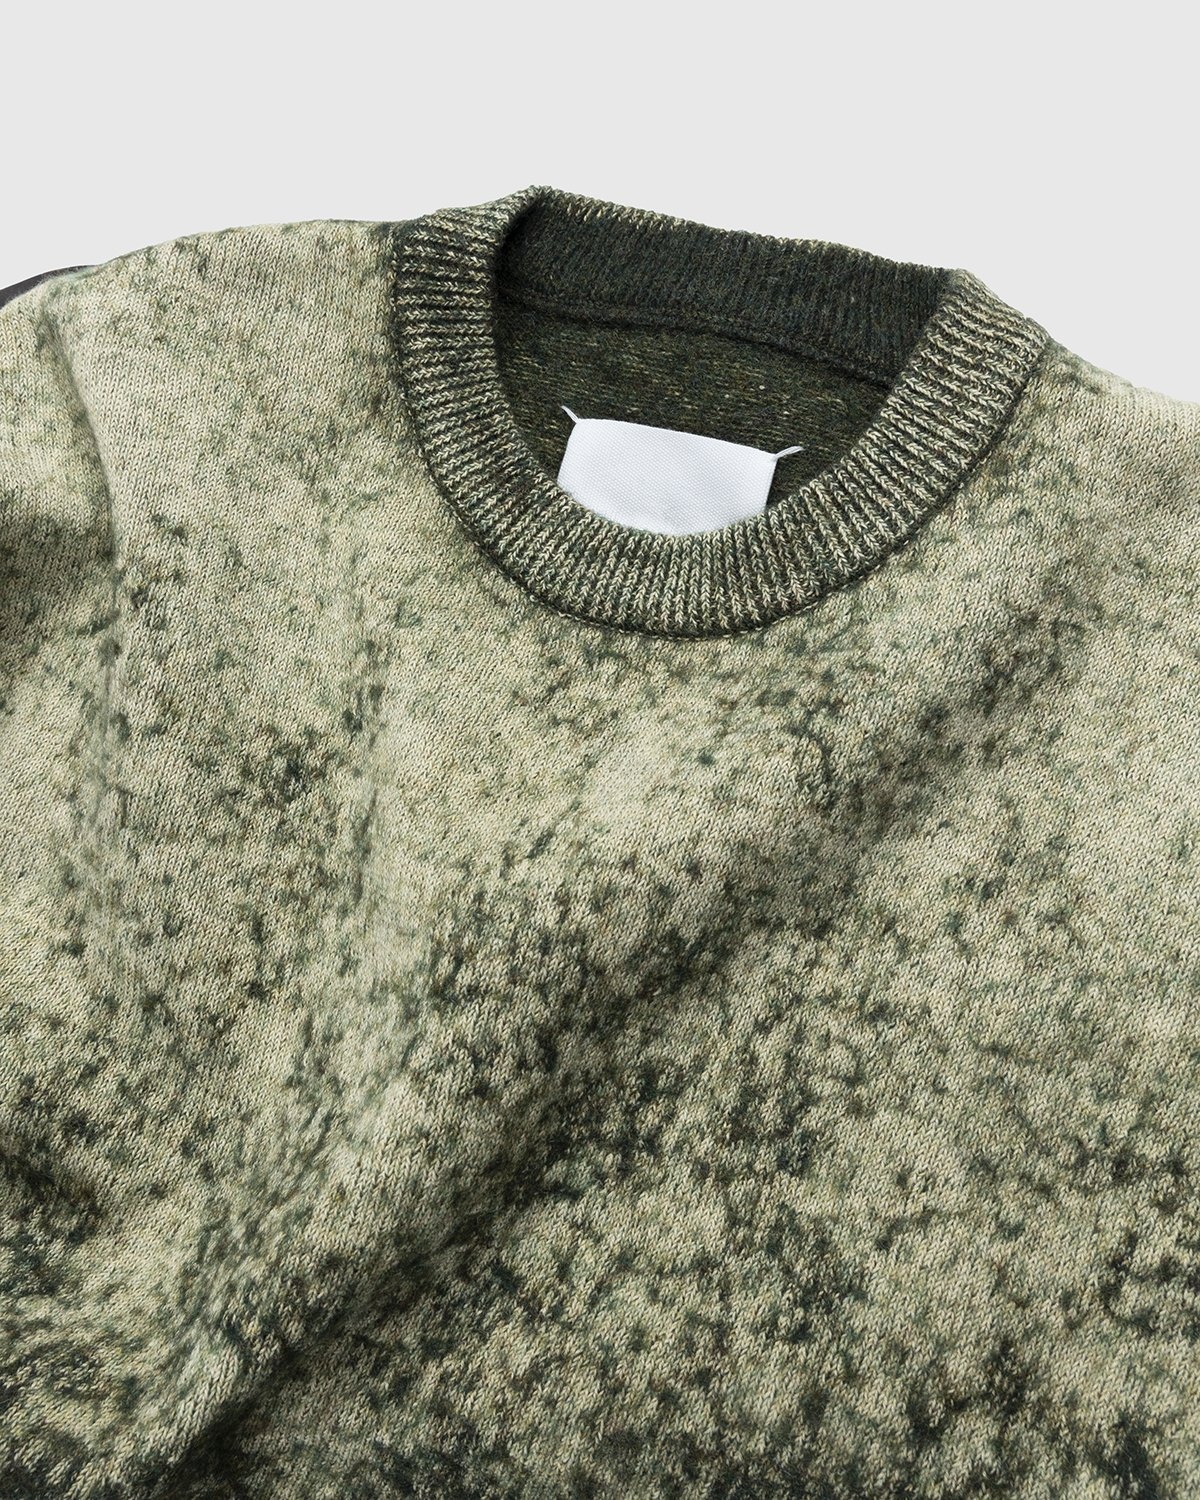 Maison Margiela – Discharged Wool Sweater - Crewnecks - Green - Image 7